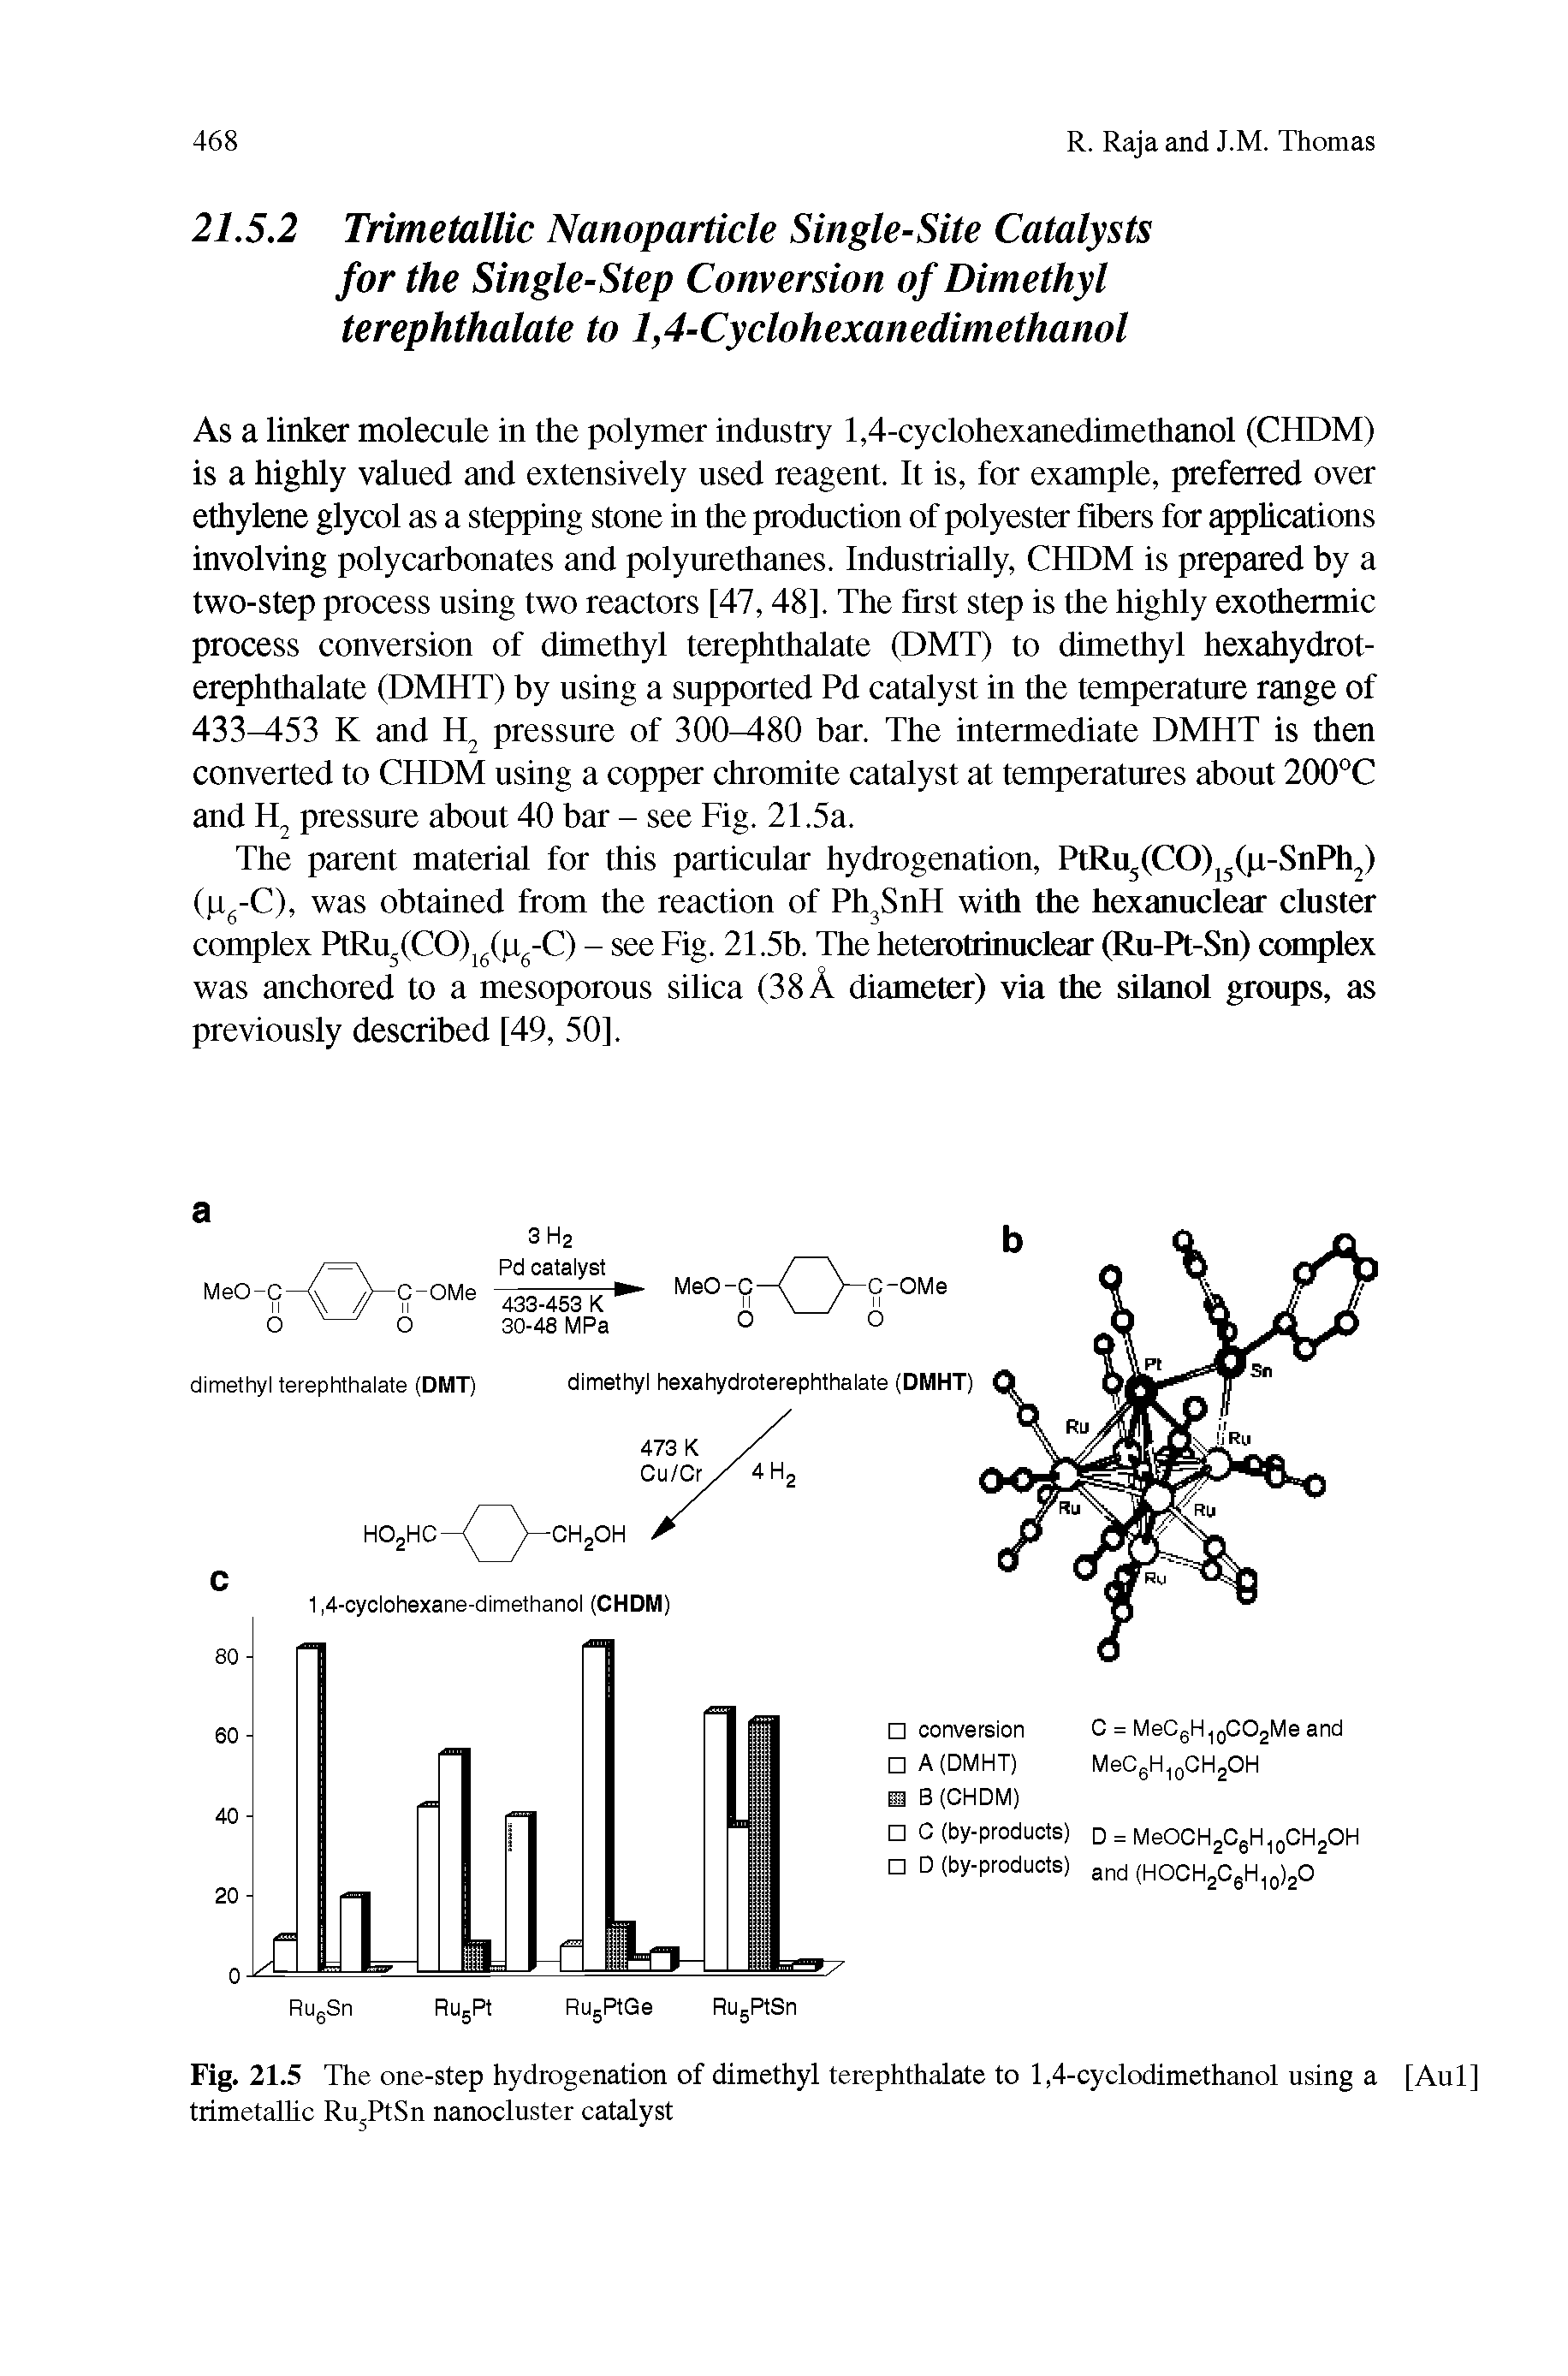 Fig. 21.5 The one-step hydrogenation of dimethyl terephthalate to 1,4-cyclodimethanol using a [Aul] trimetalhc Ru PtSn nanocluster catalyst...